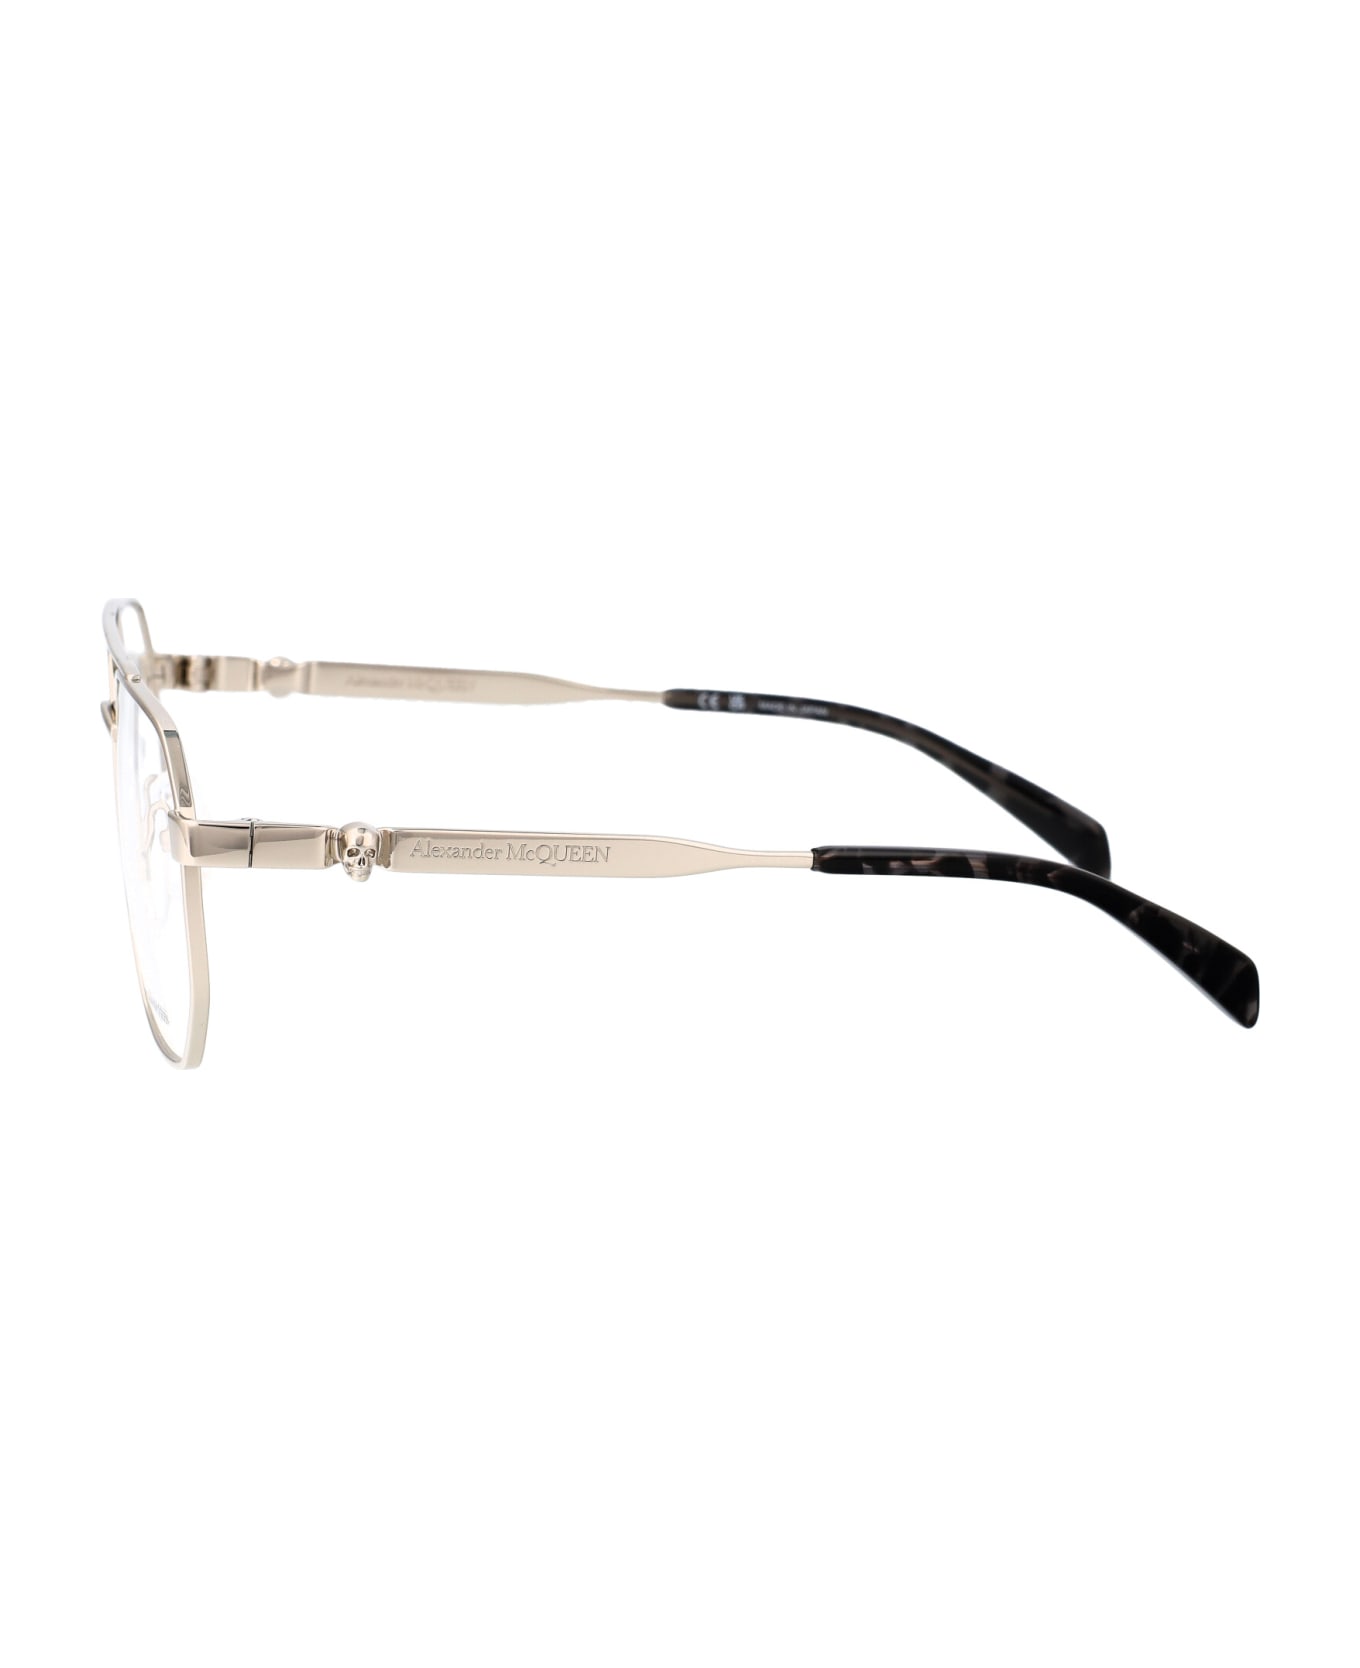 Alexander McQueen Eyewear Am0459o Glasses - 003 SILVER SILVER TRANSPARENT アイウェア